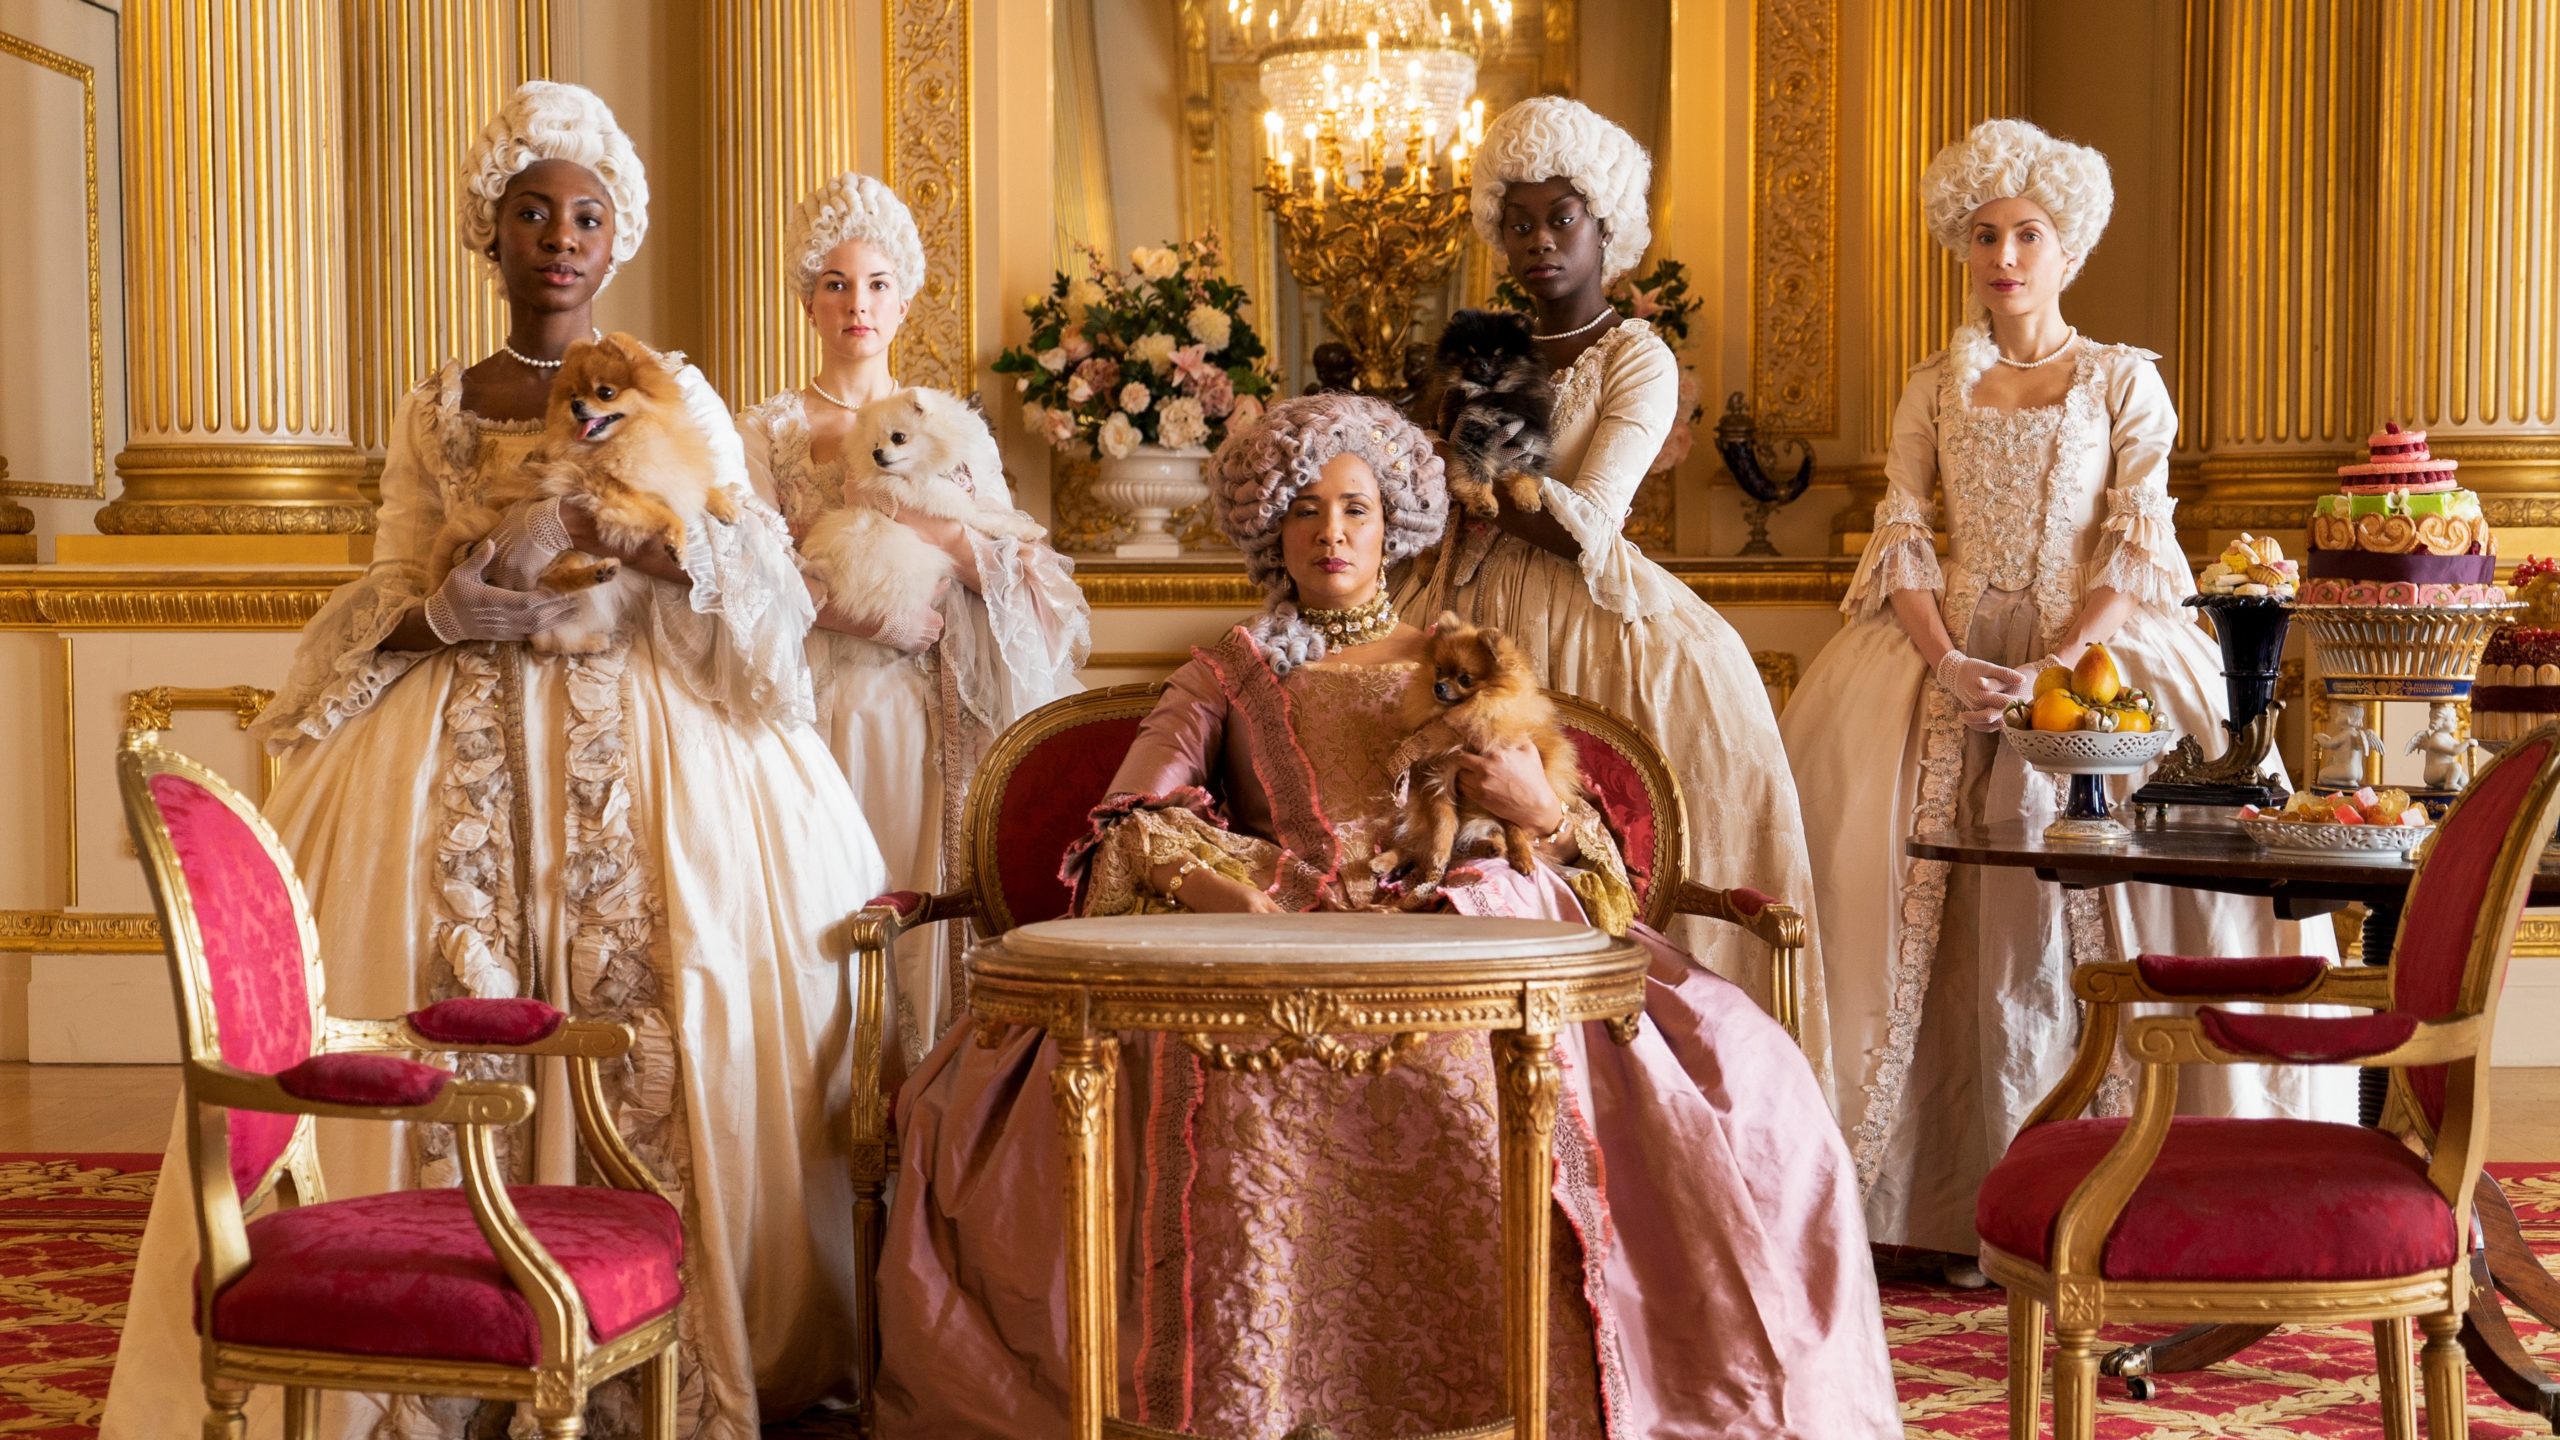 Bridgerton. 2020-present. Netflix Entertainment. The Queen seated with her handmaids circled around her. 